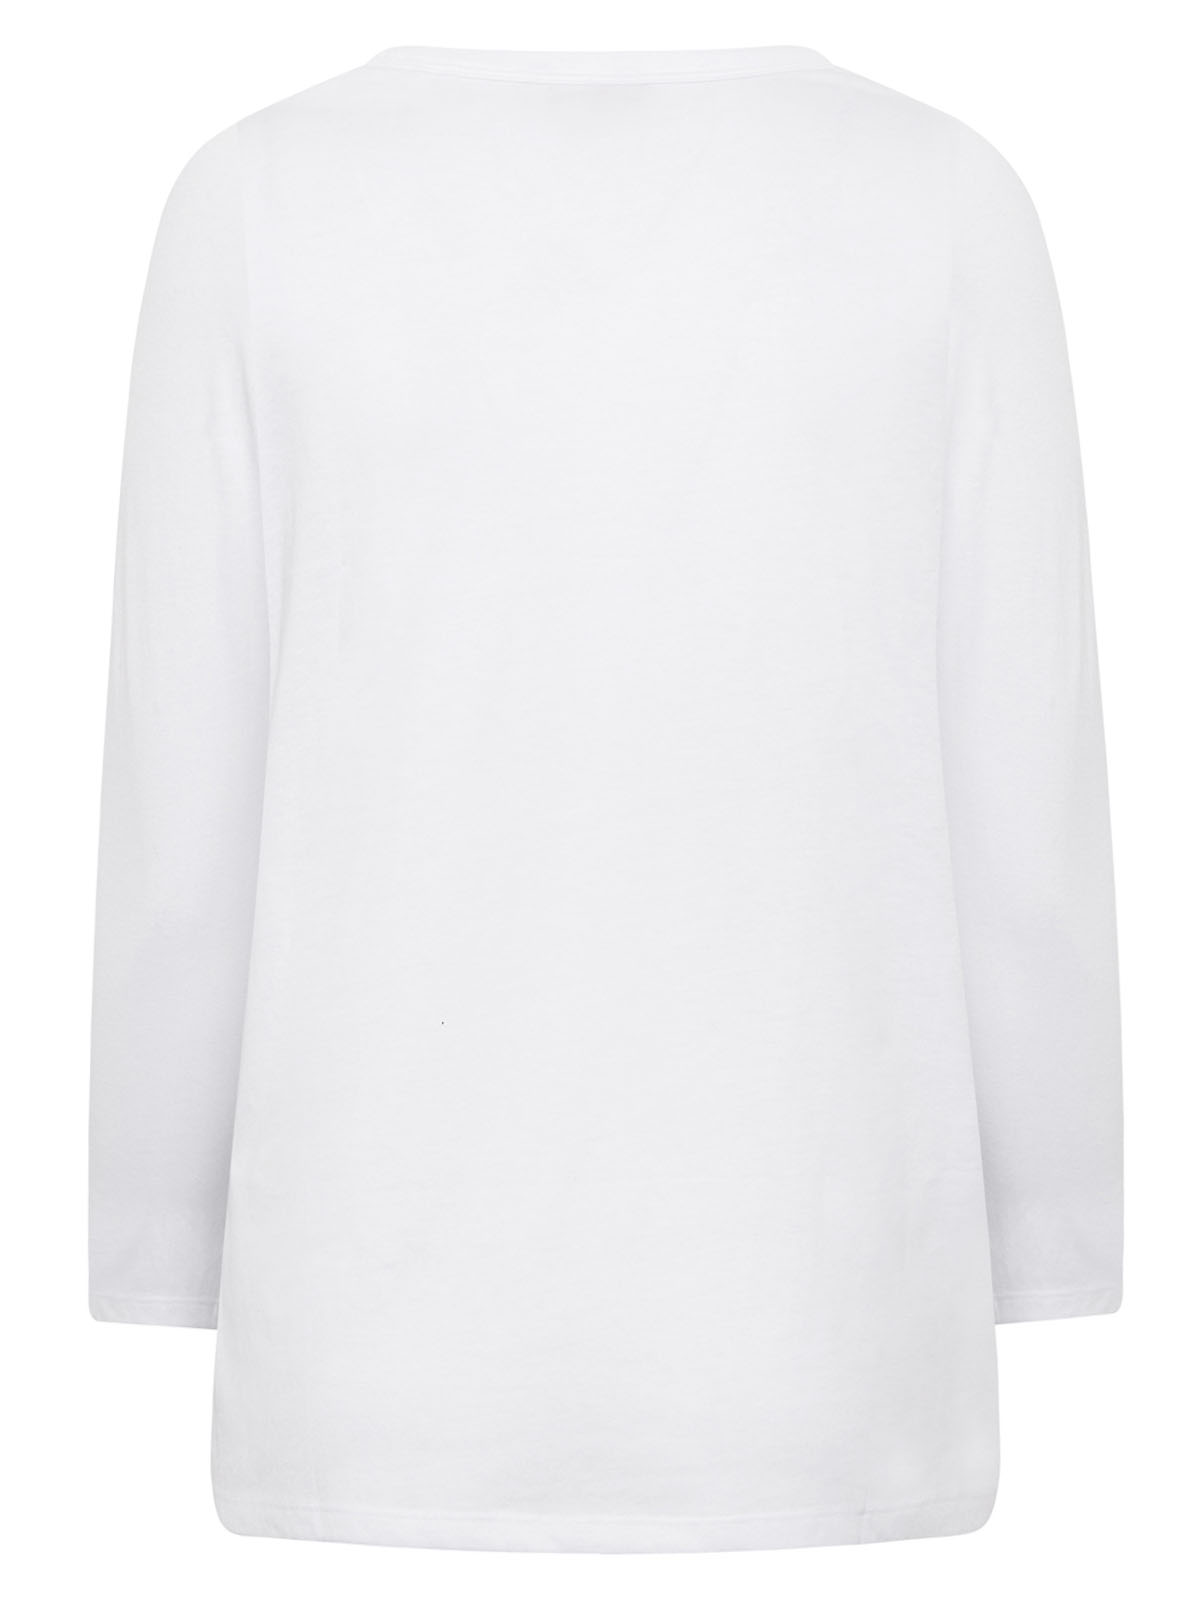 CURVE - - WHITE T-Shirt Rich 38/40 Plus to 14 Long Cotton - Size Sleeve